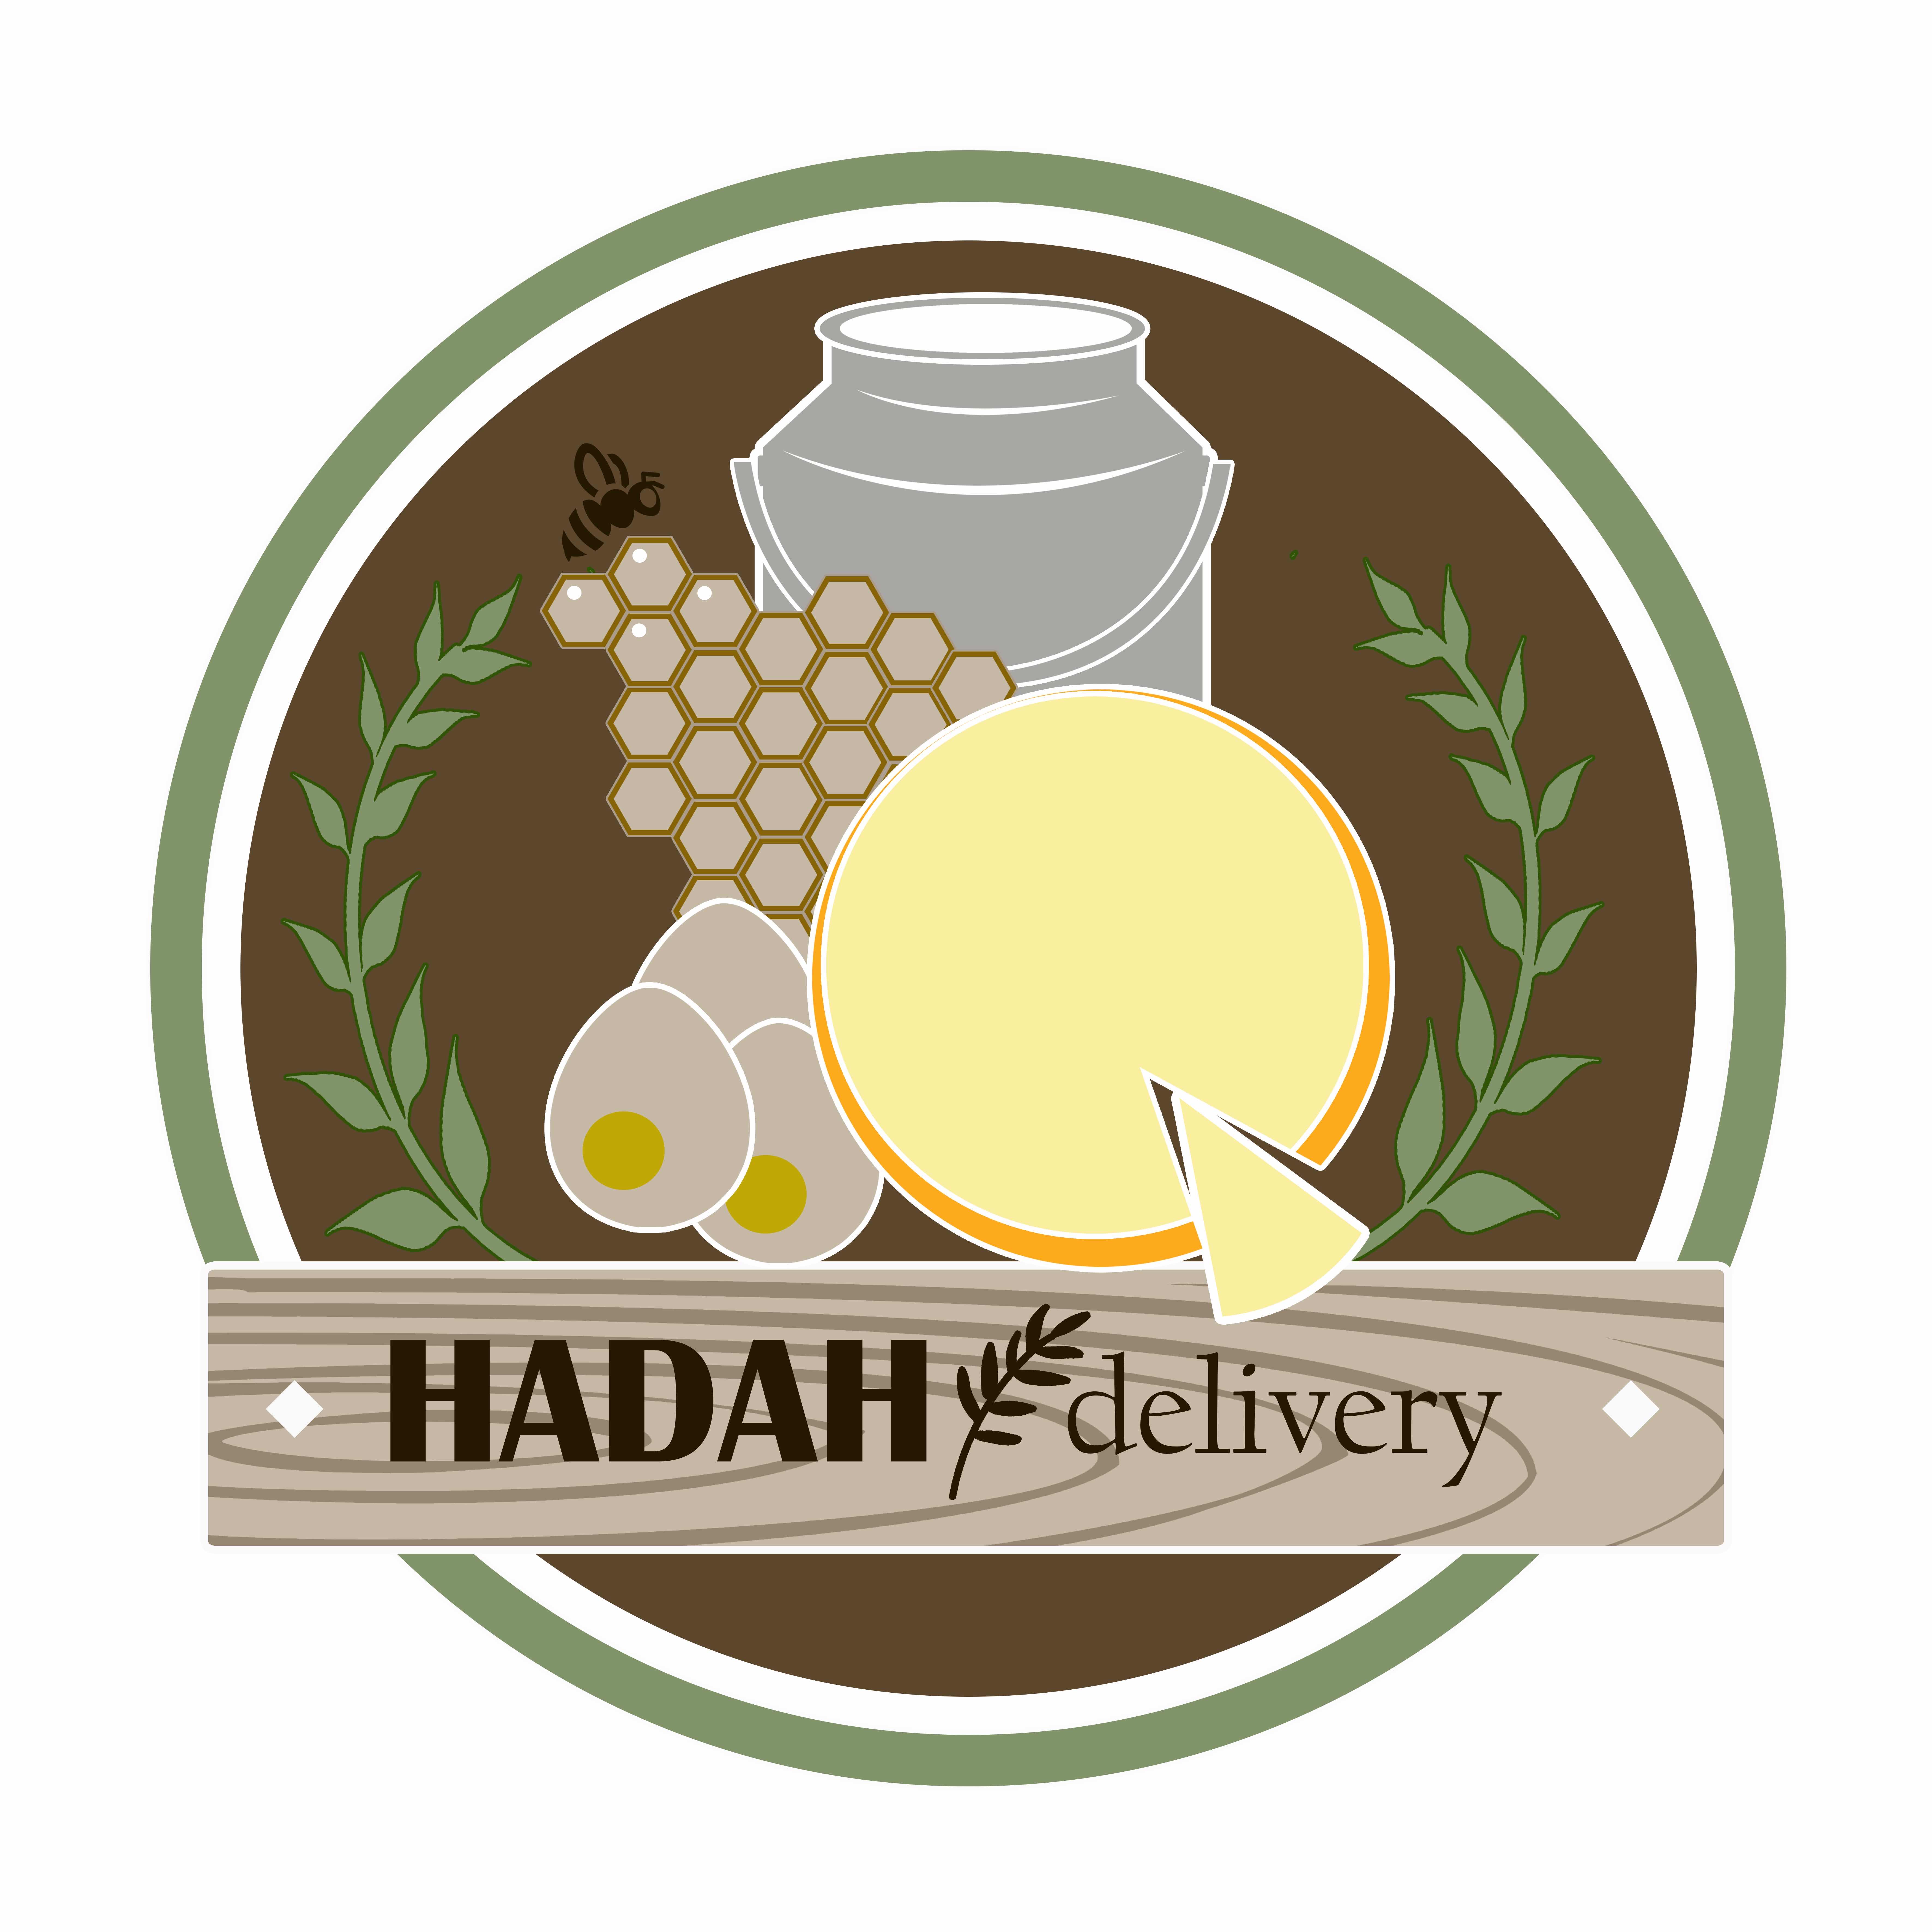 Hadah delivery - CNPJ 42.019.148/0001-18